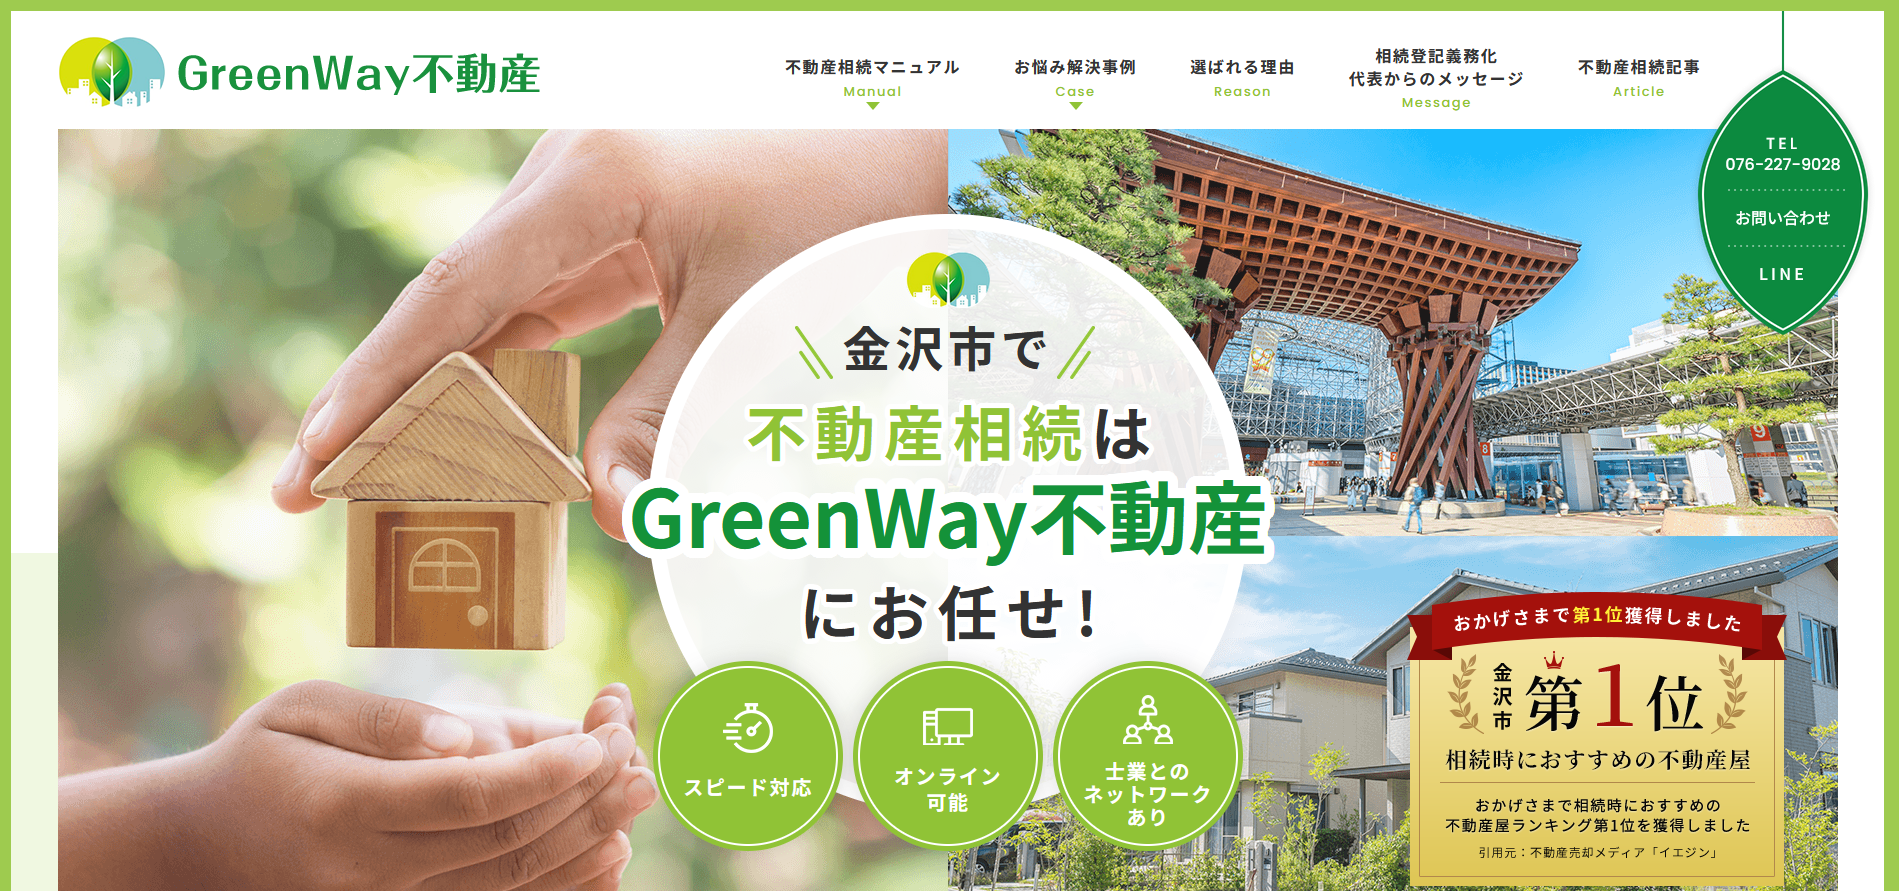 1. 株式会社GreenWay不動産